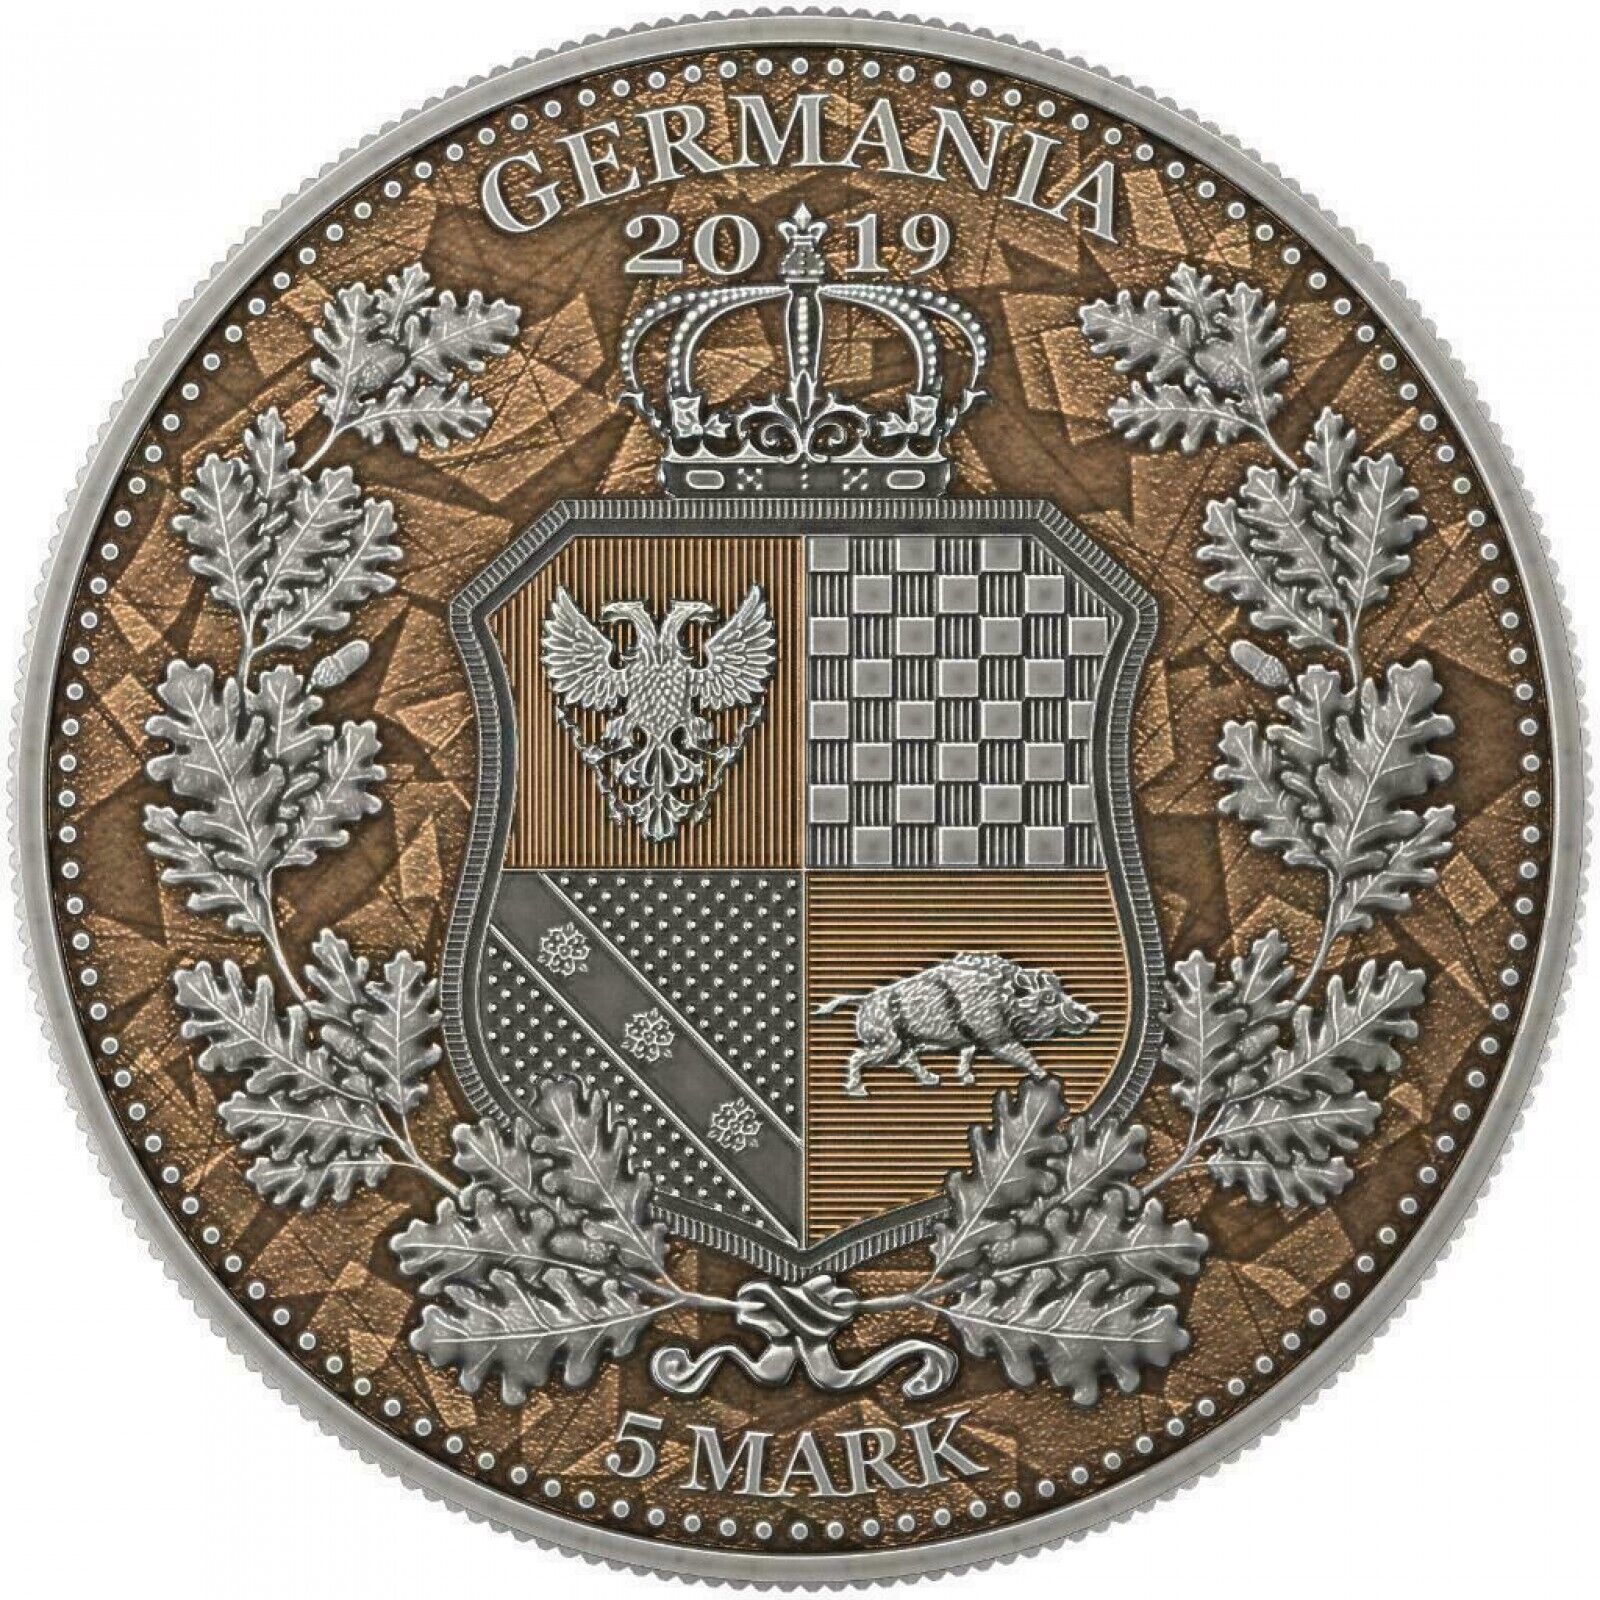 1 Oz Silver Coin 2019 5 Mark Columbia & Germania Allegories - Antique Copper-classypw.com-1